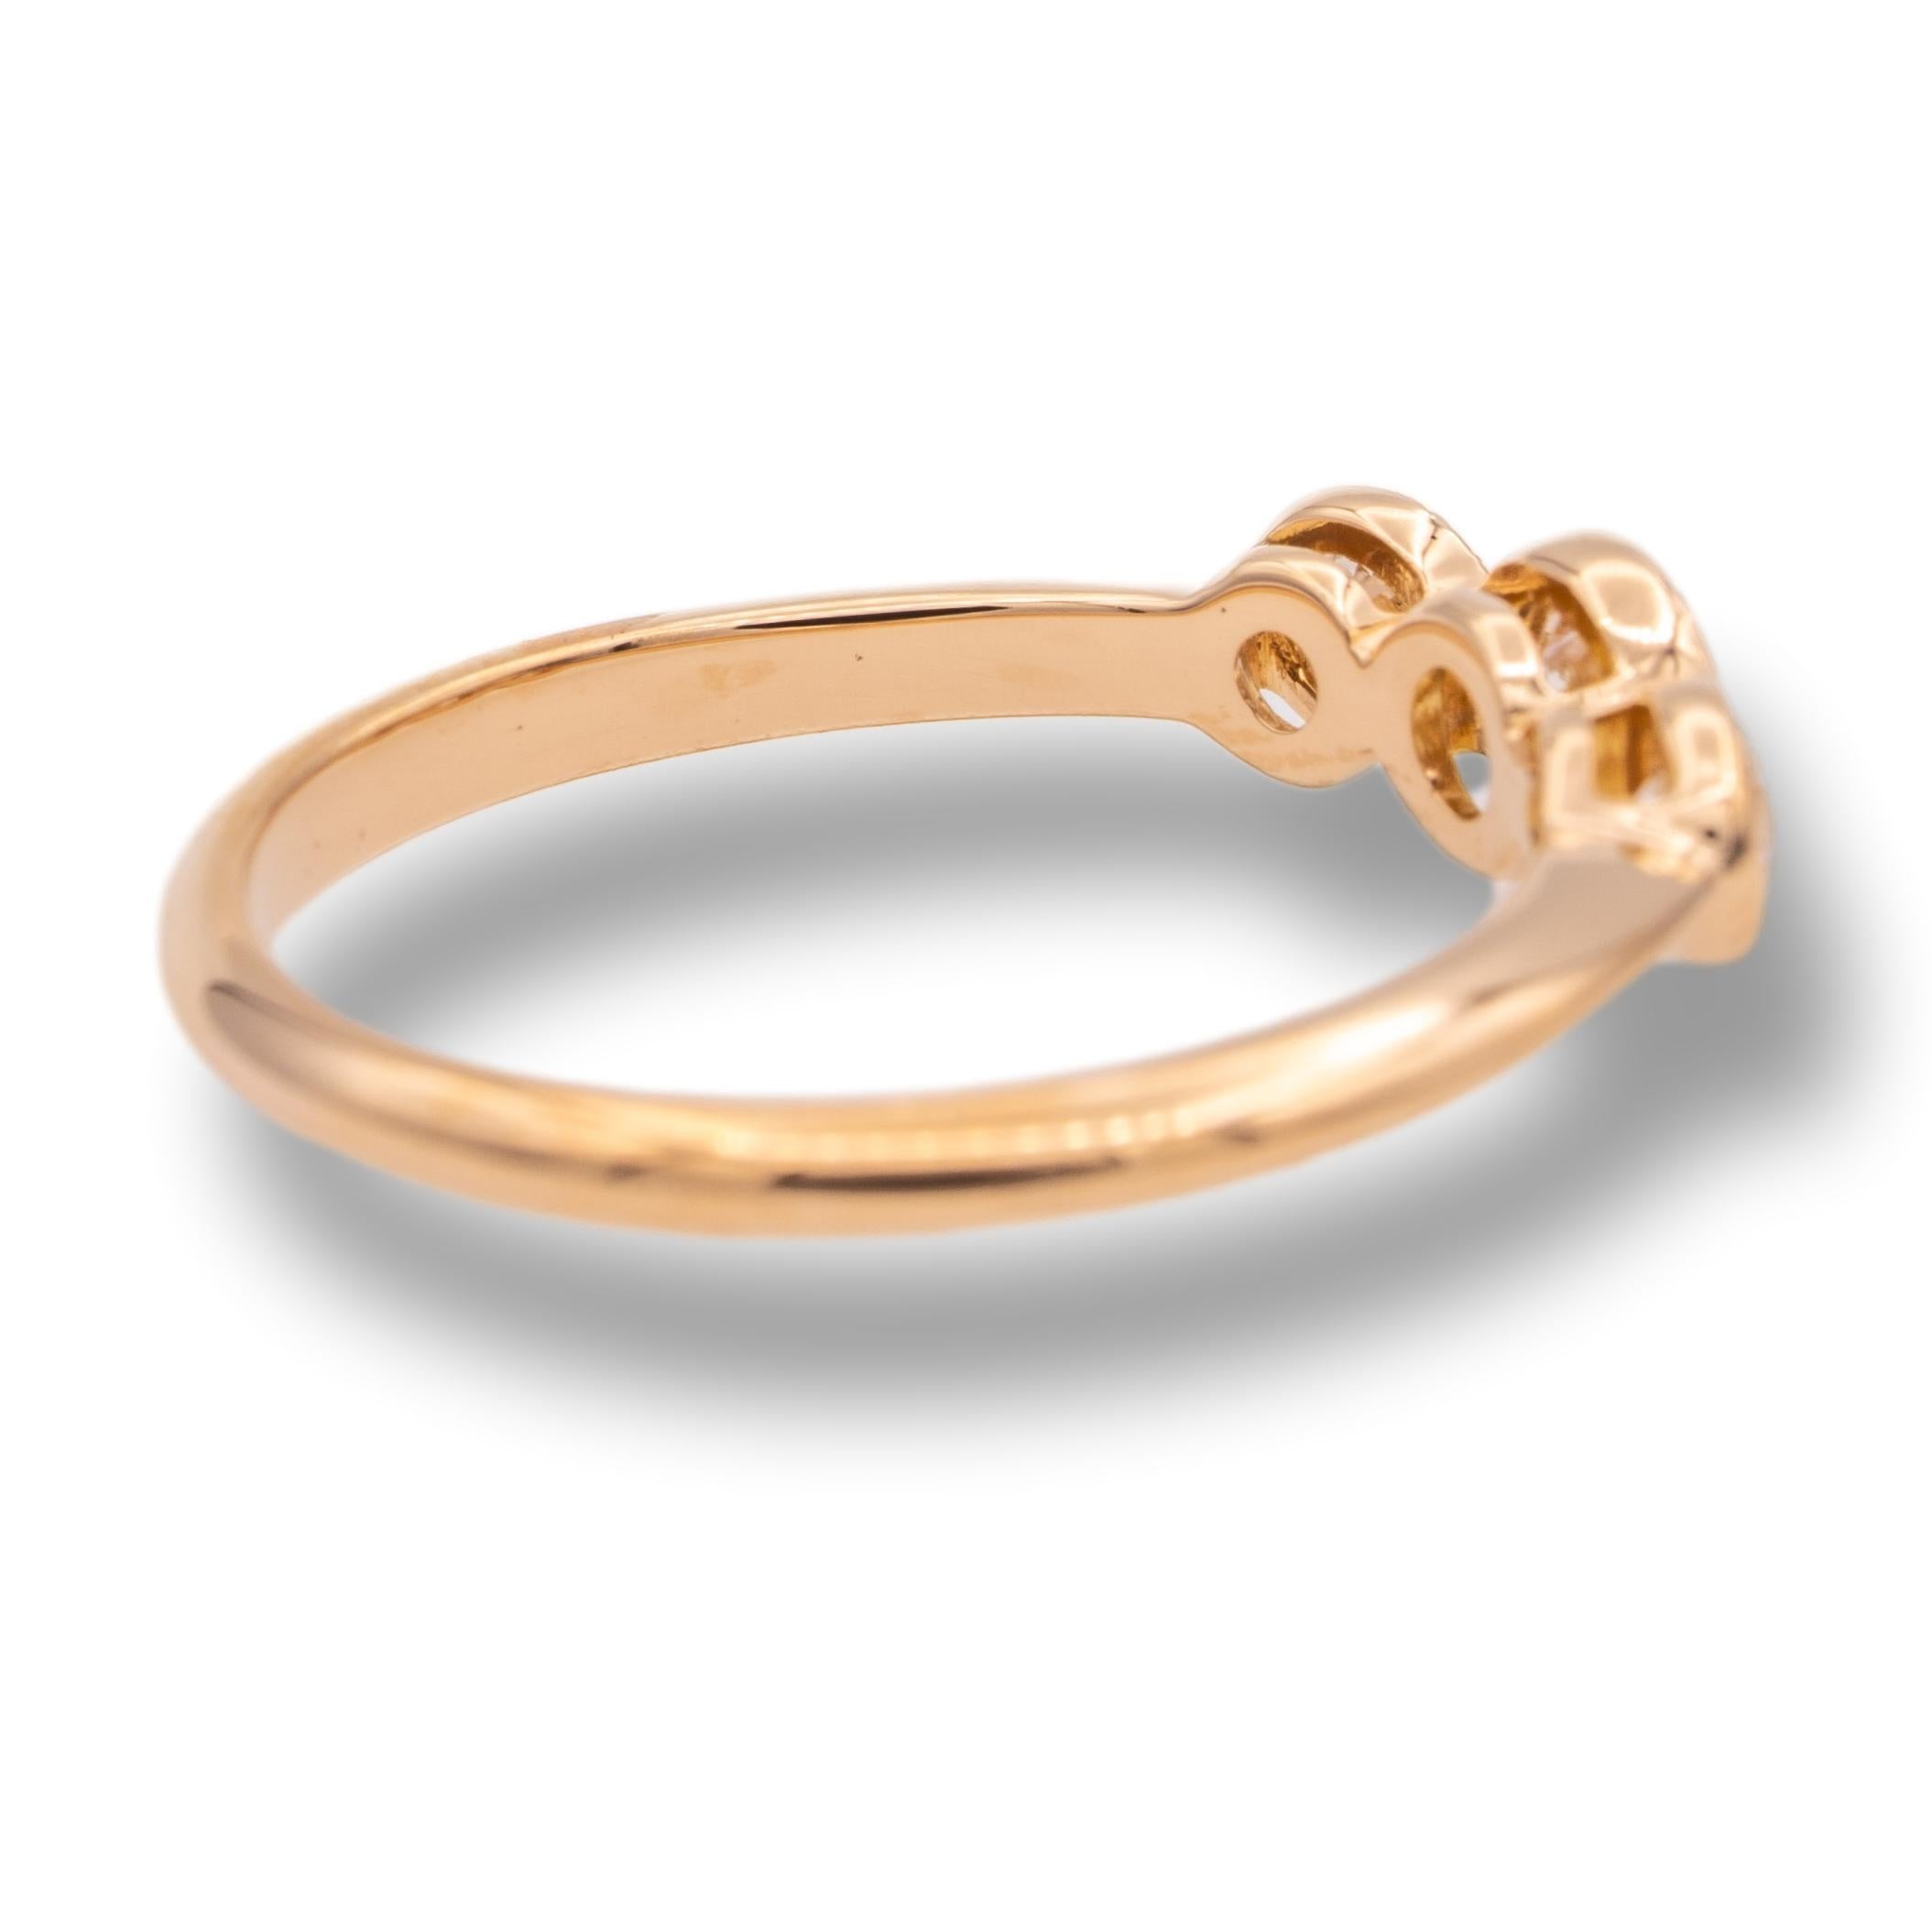 Romantic Tiffany & Co. 3 Stone 18K Rose Gold Bezels Diamond Ring 0.29 Cts. Total GVVS2